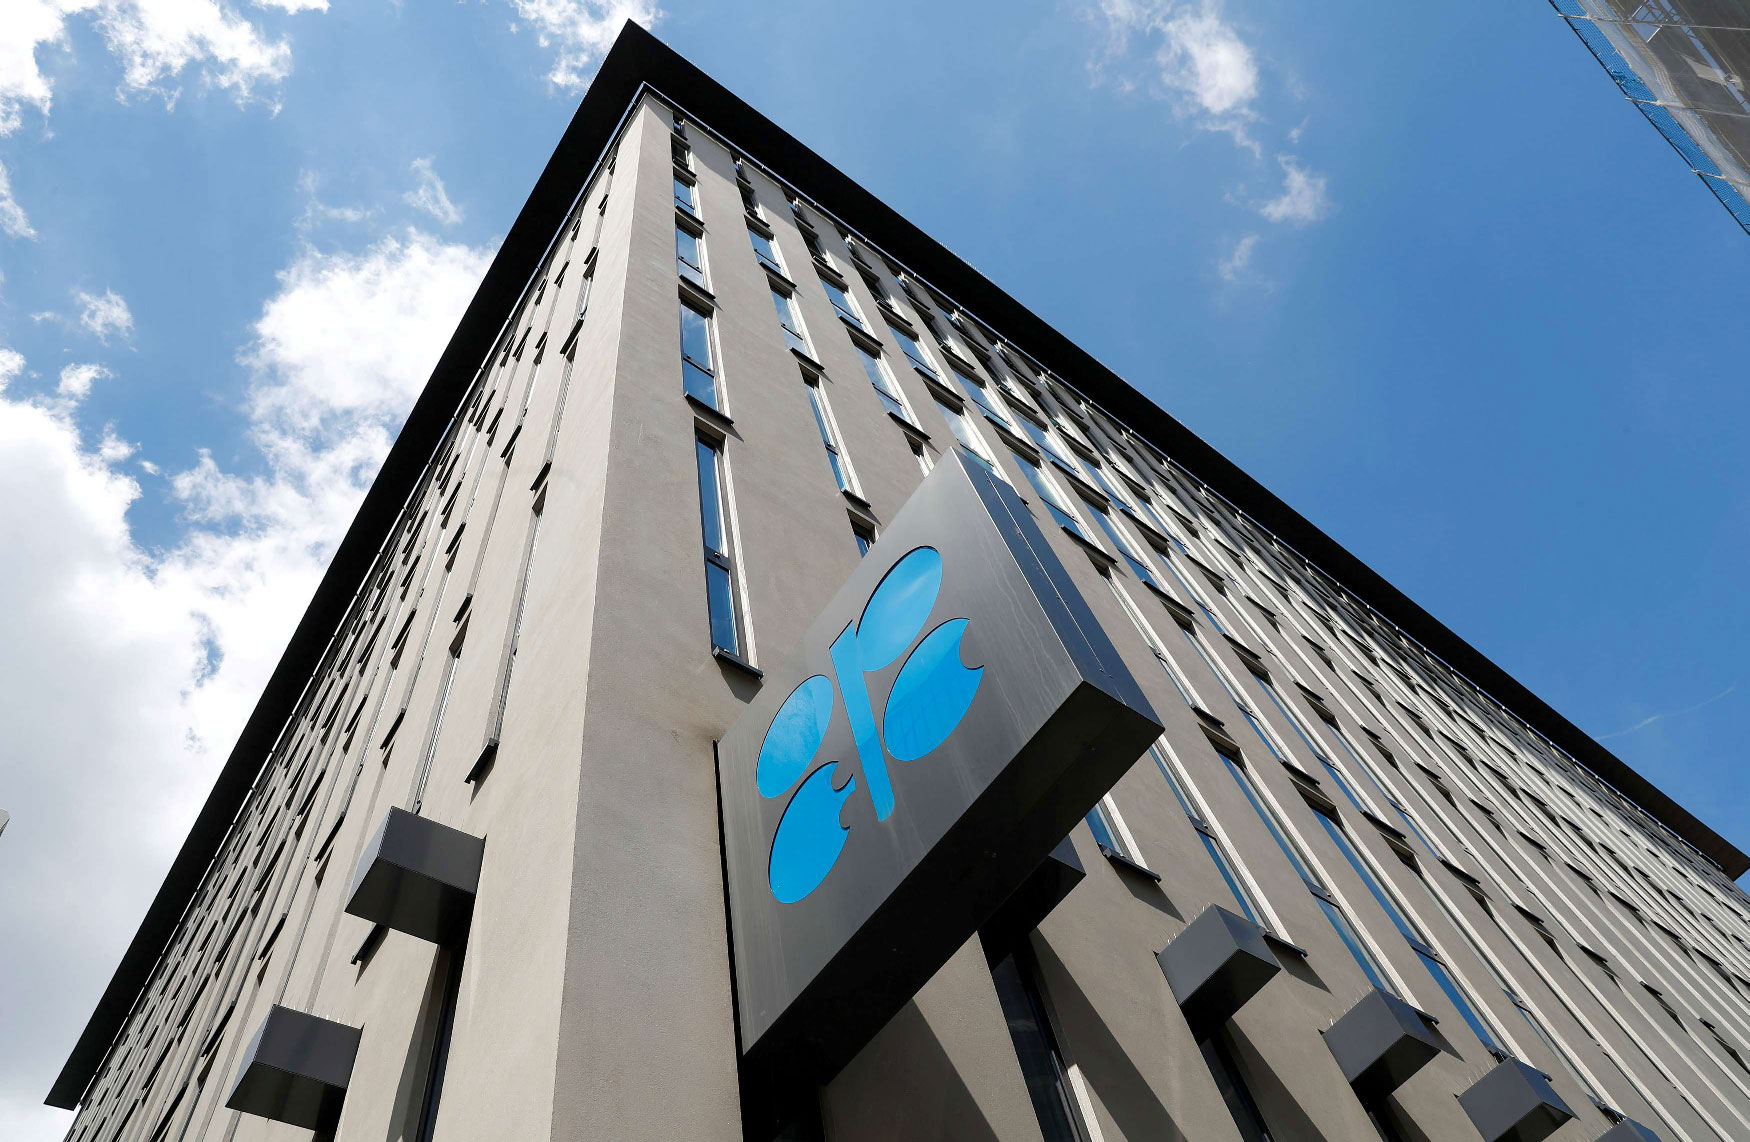 Building of OPEC headquarters is pictured in Vienna, Austria